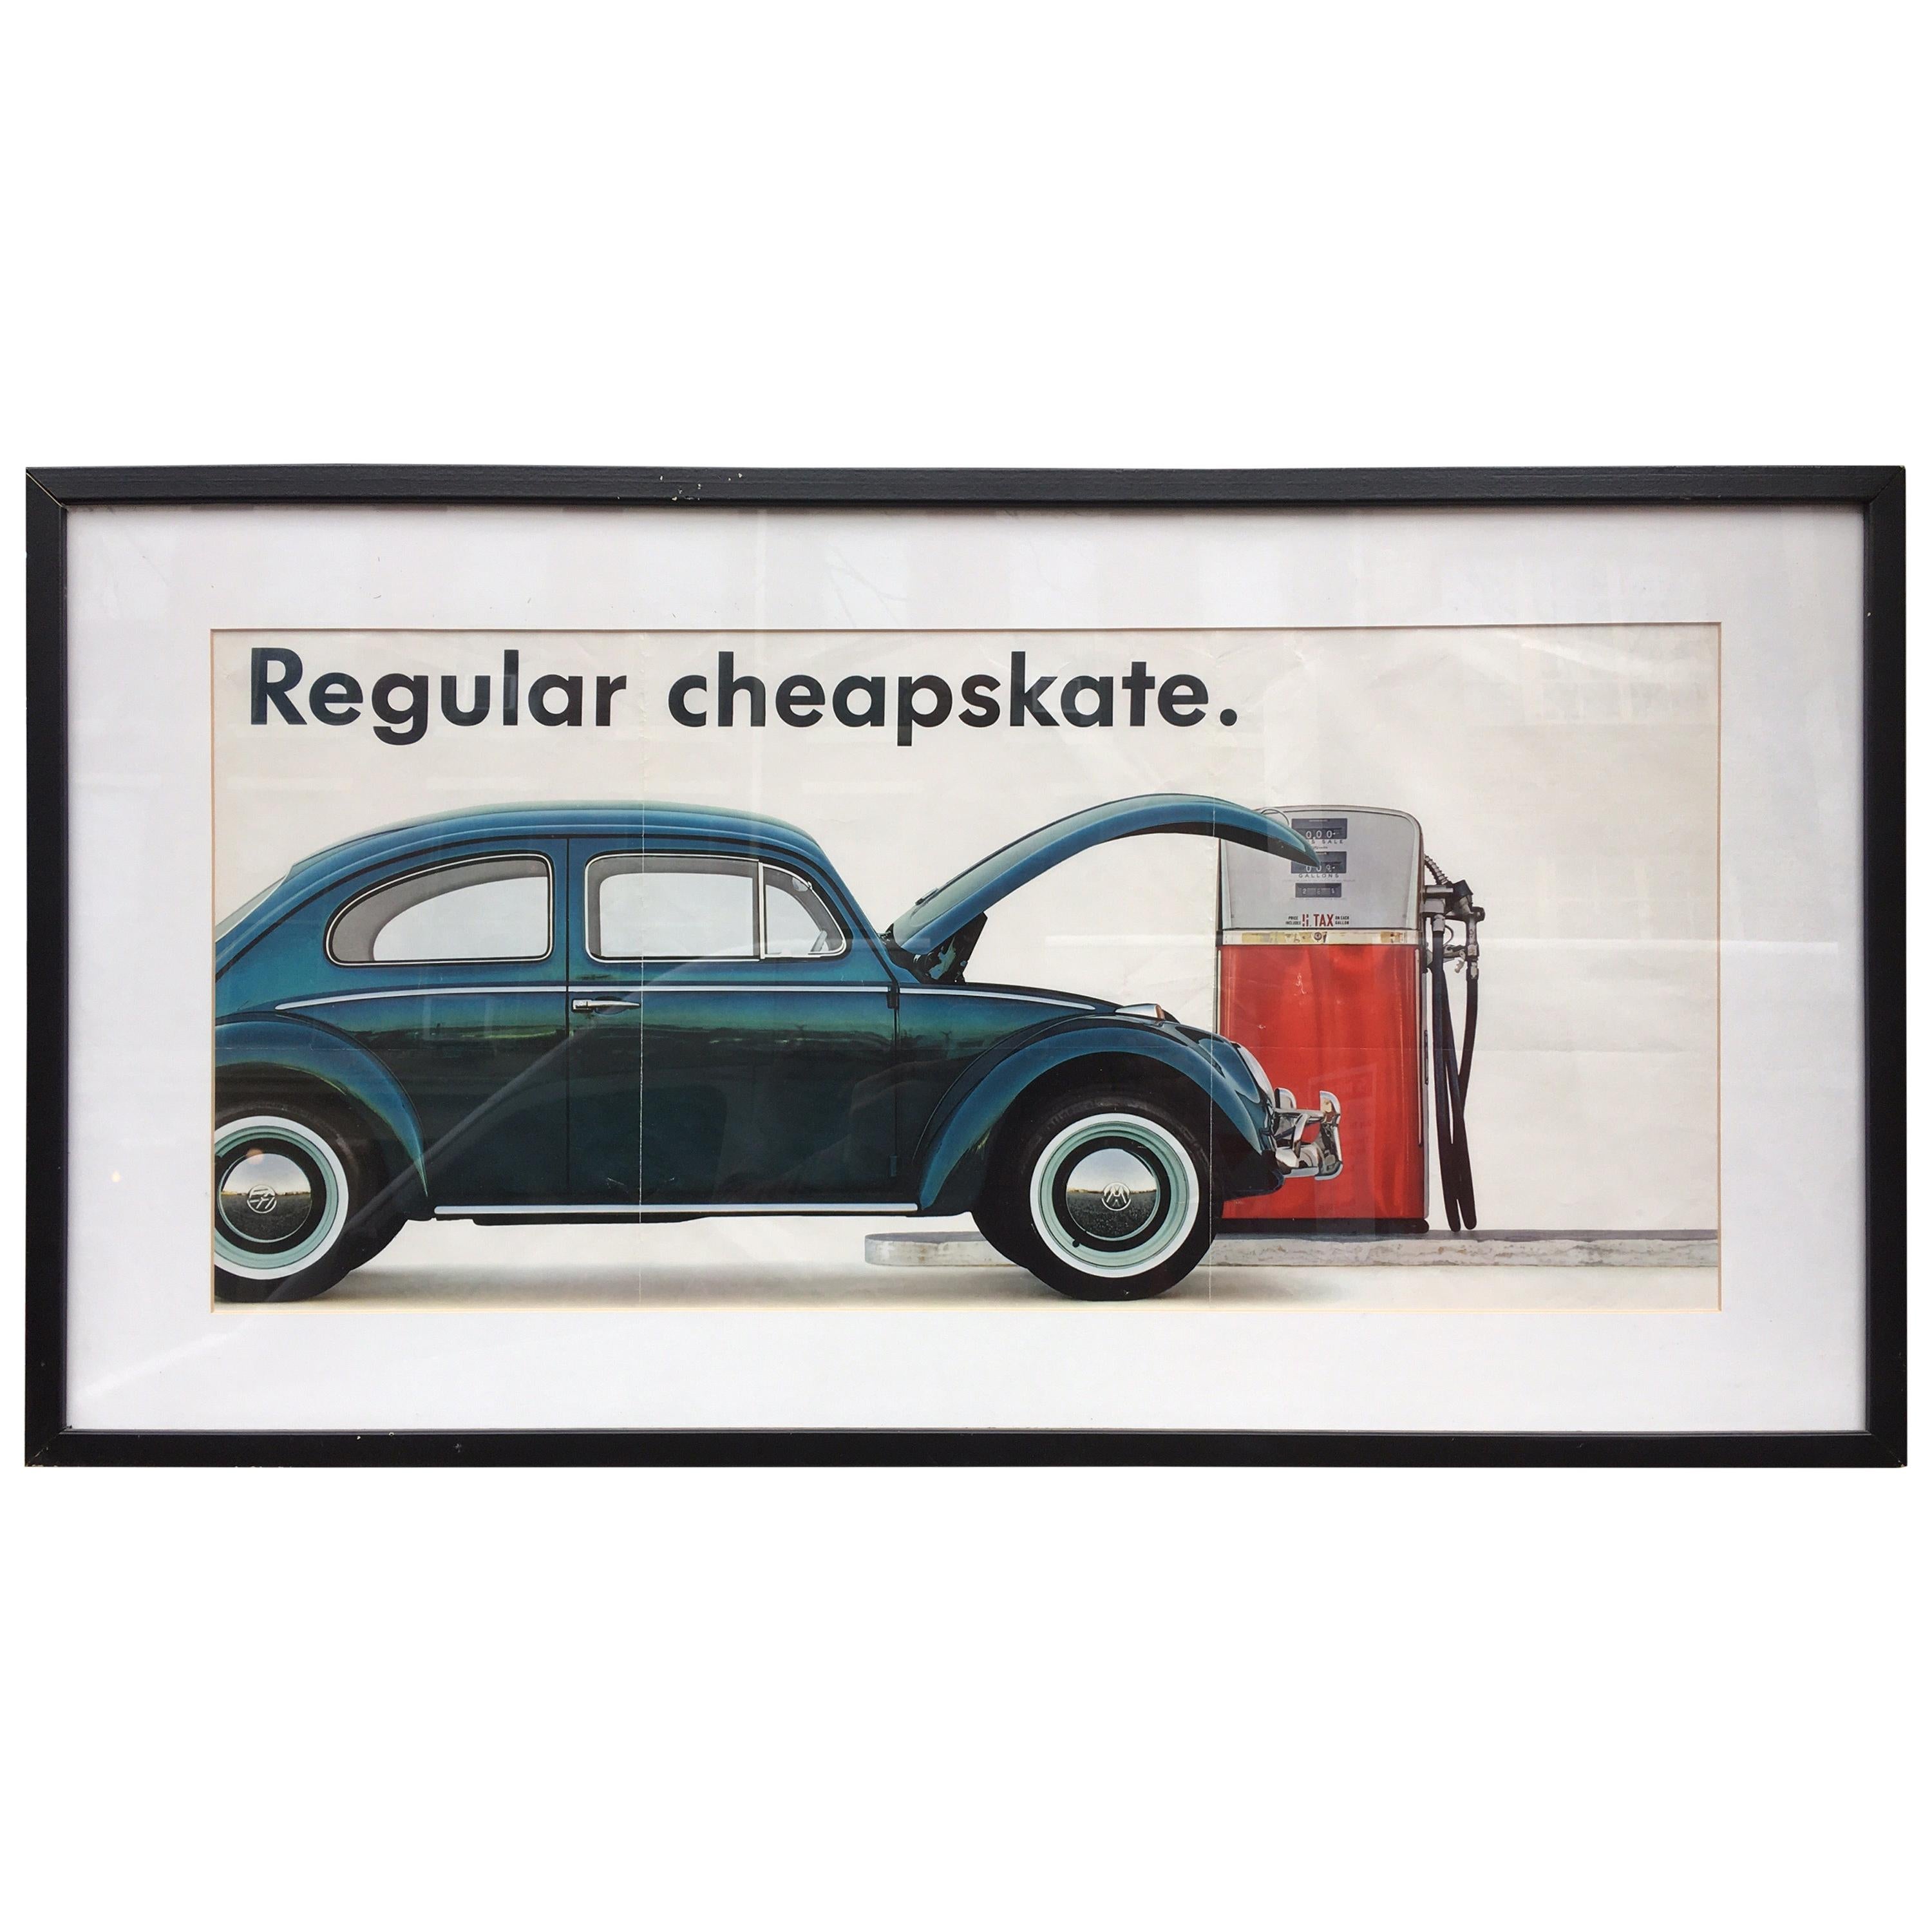 Original VW Dealership Poster